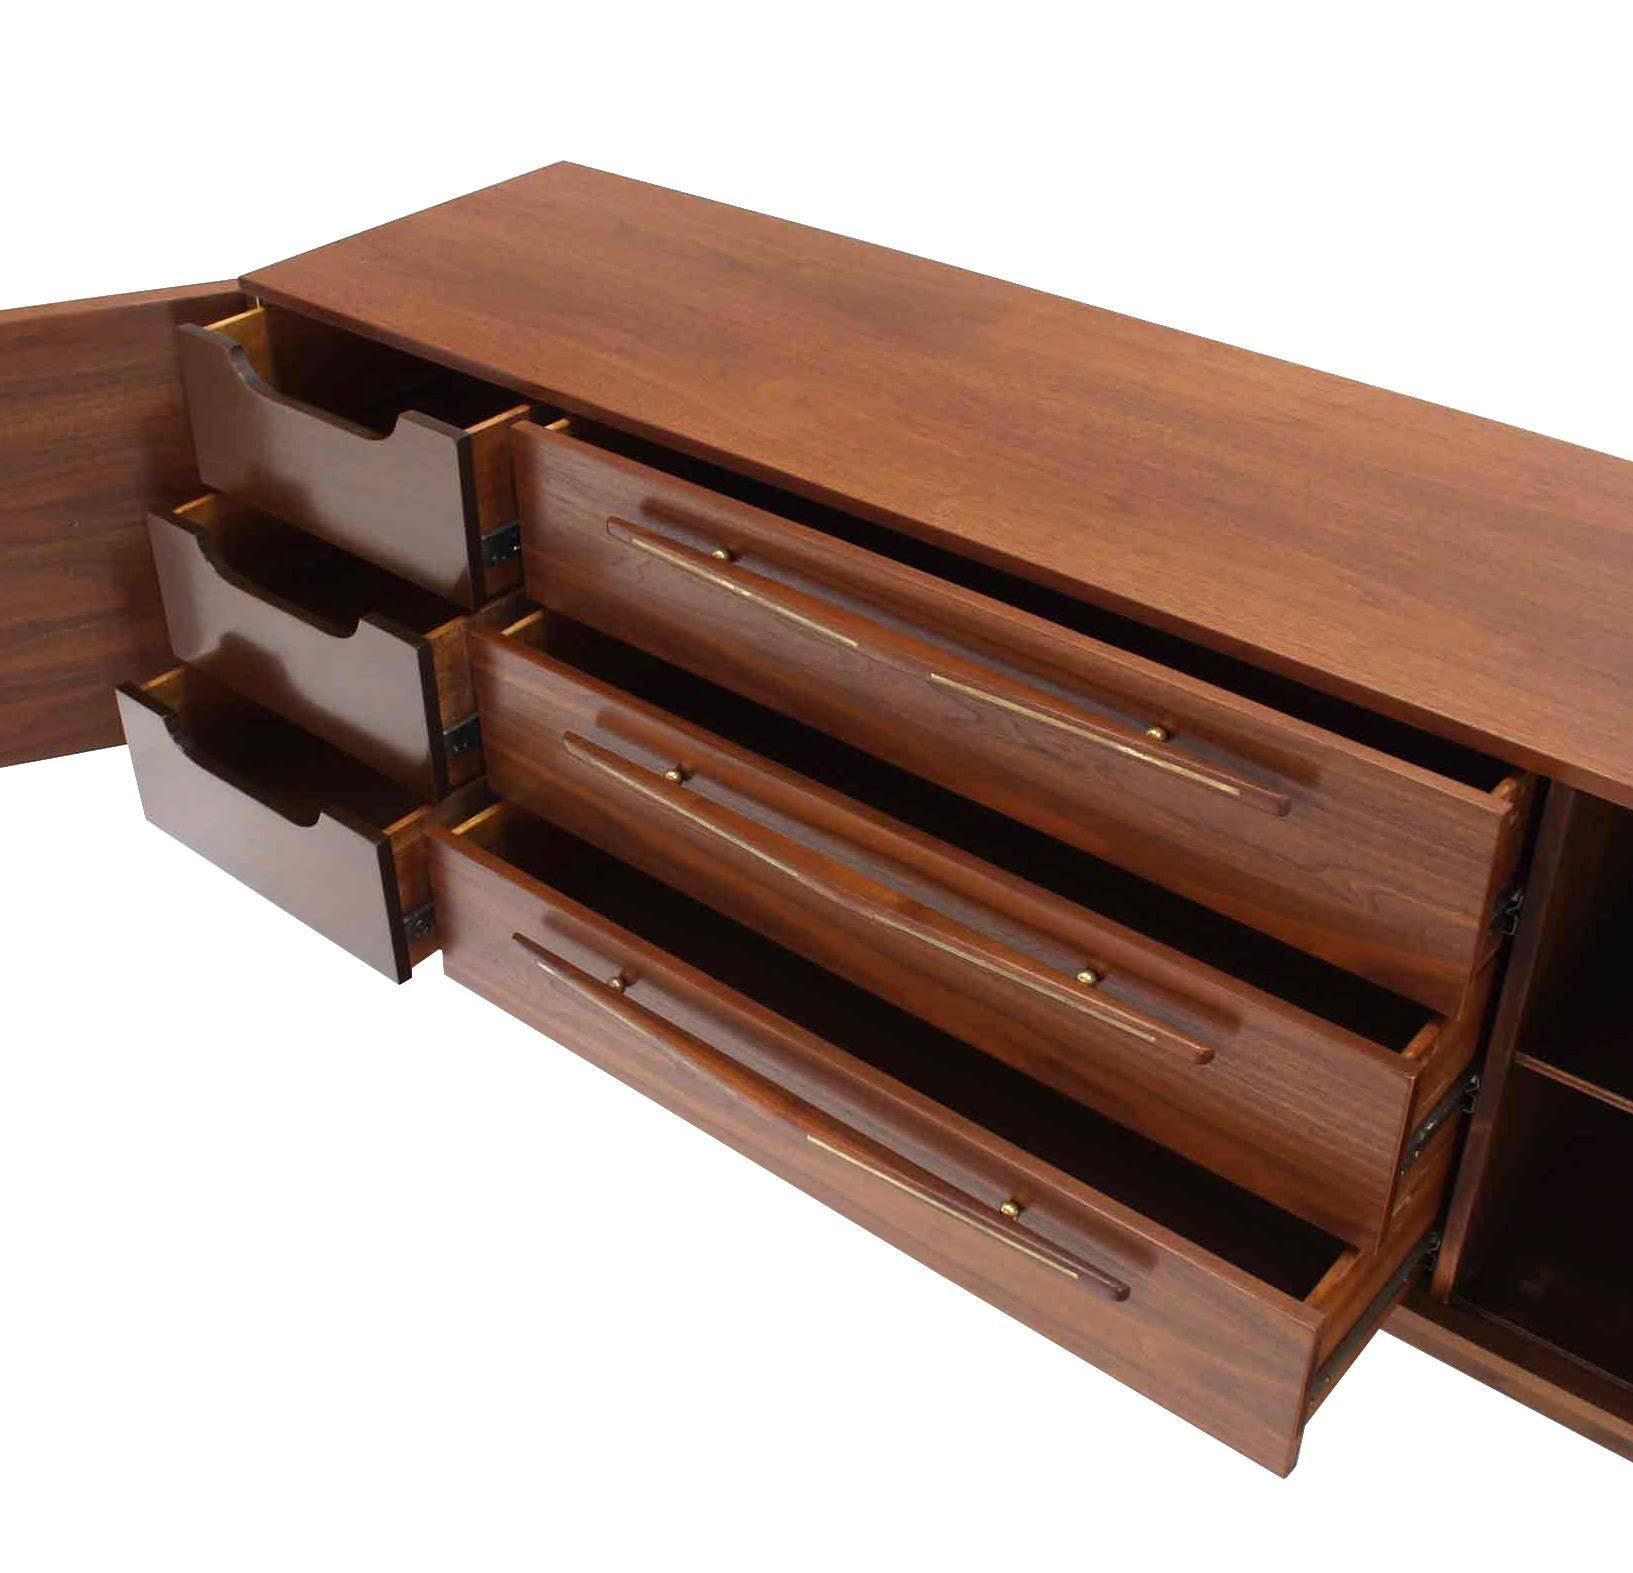 Outstanding Mid-Century Walnut Dresser with Heavy Sculptural Hardware In Excellent Condition For Sale In Rockaway, NJ